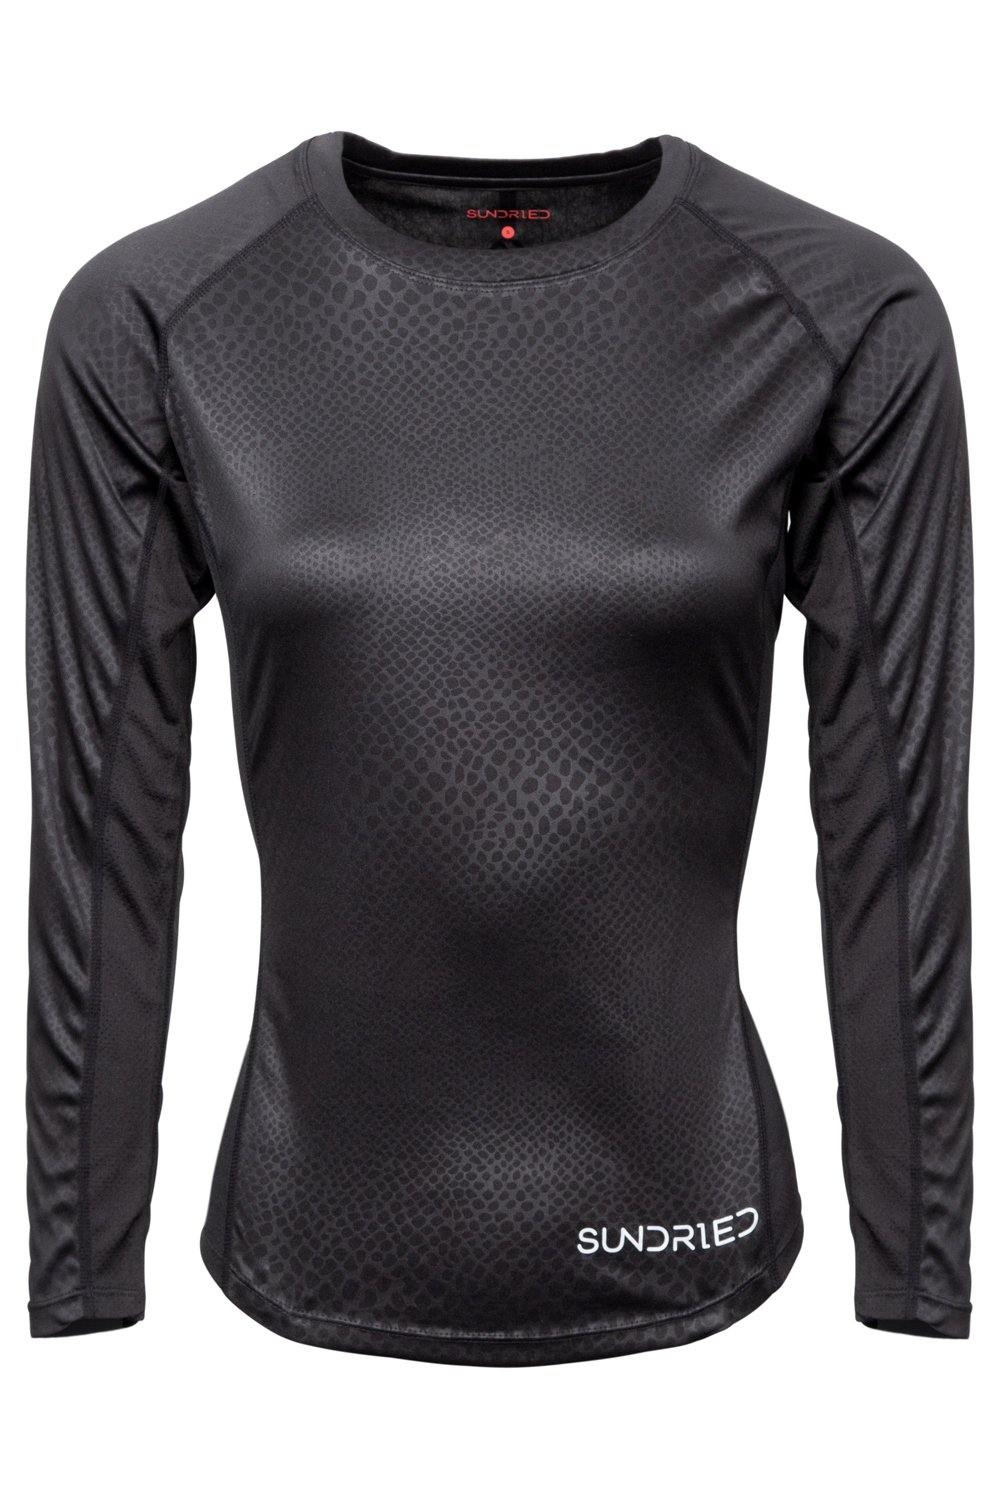 Sundried Eclipse Women's Long Sleeve Top Baselayer L Black SD0166 L Black Activewear